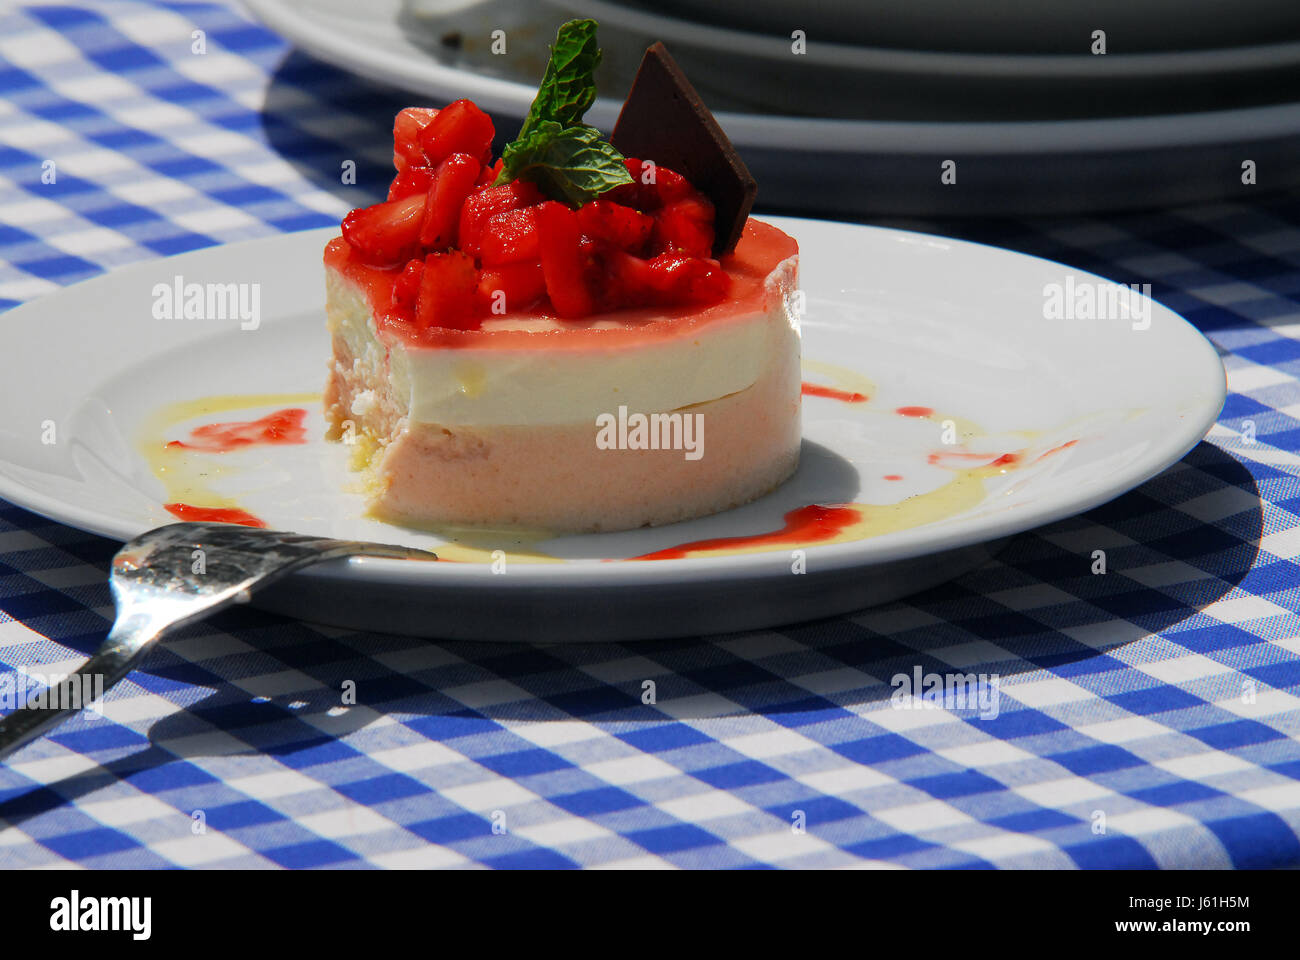 cake pie dainty piece of cake kitchens dessert cakes strawberries progenies Stock Photo